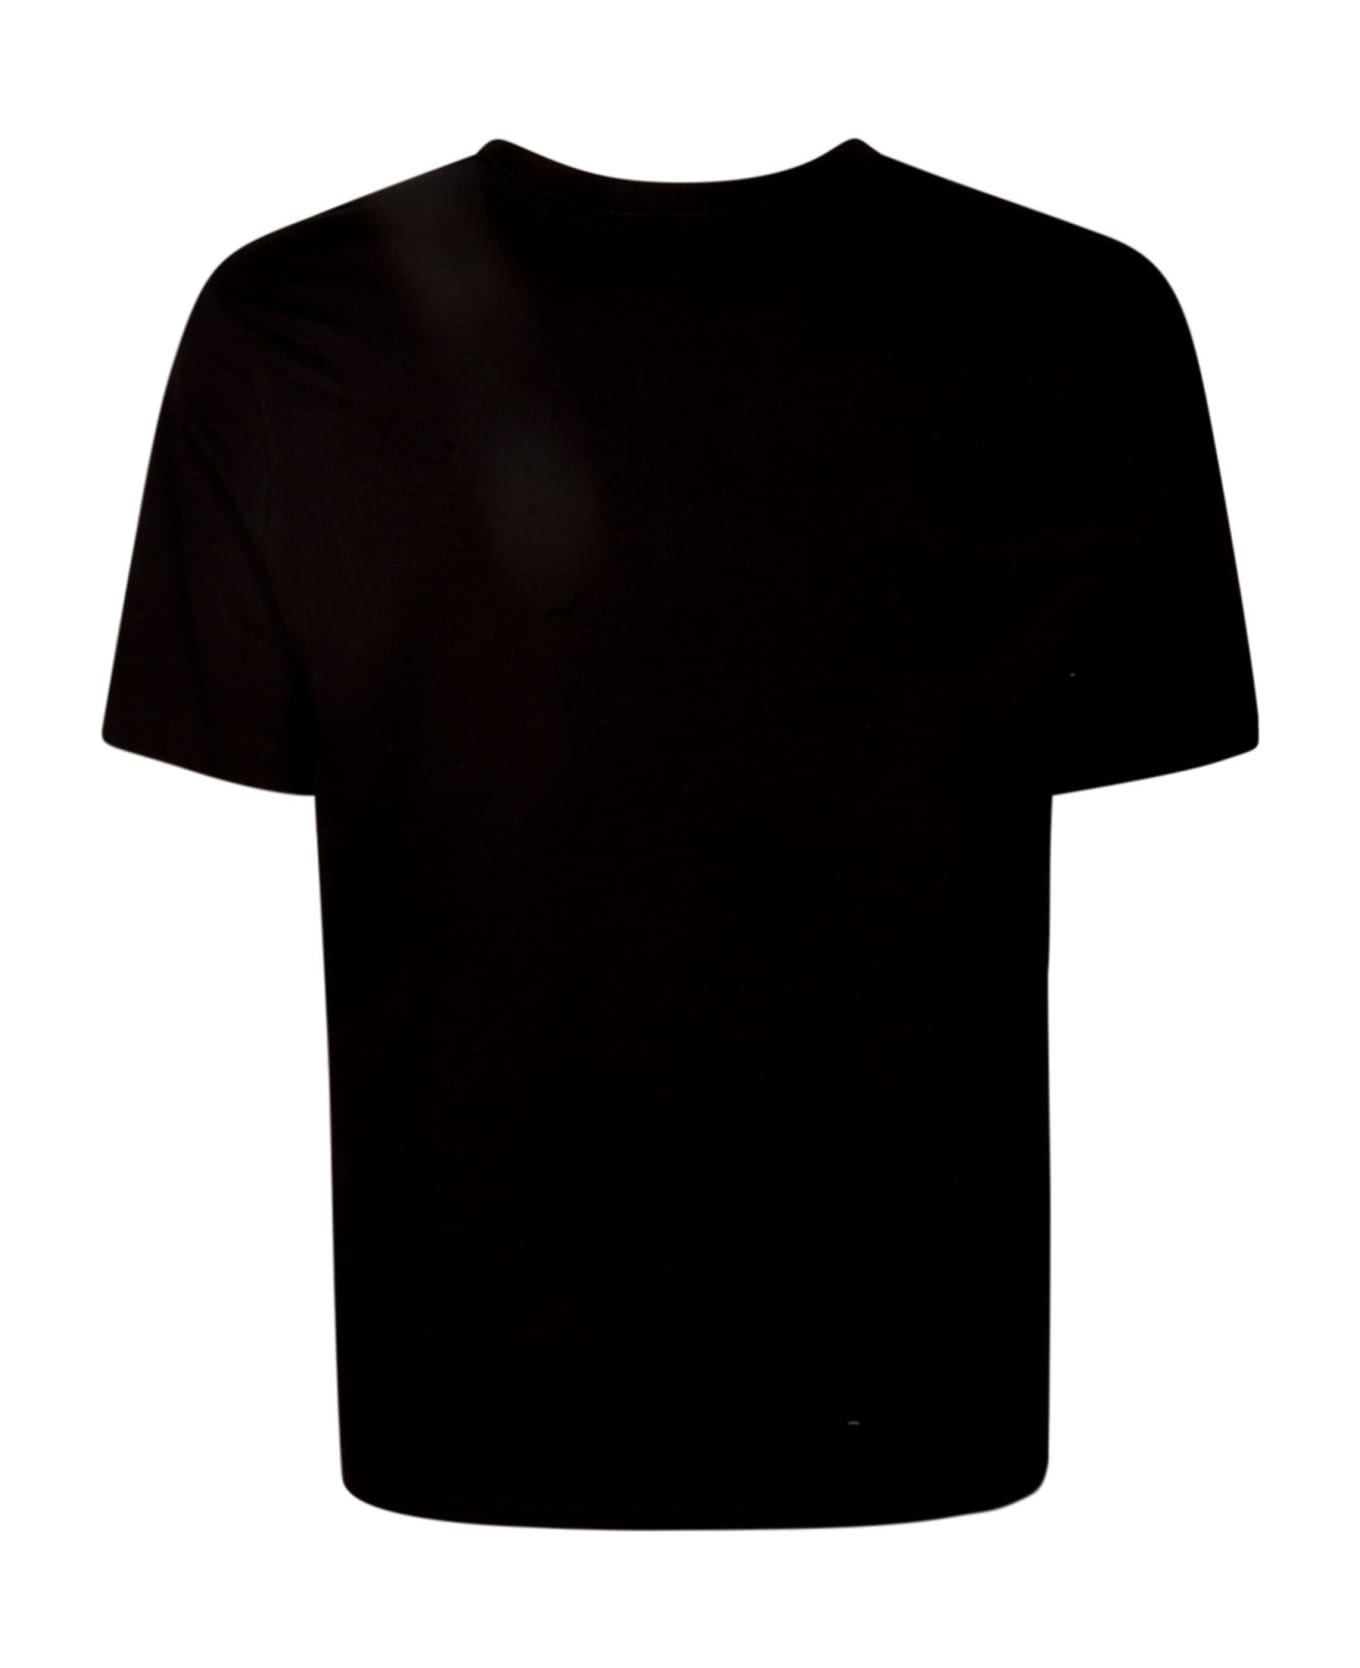 Michael Kors Logo Detail T-shirt - Black